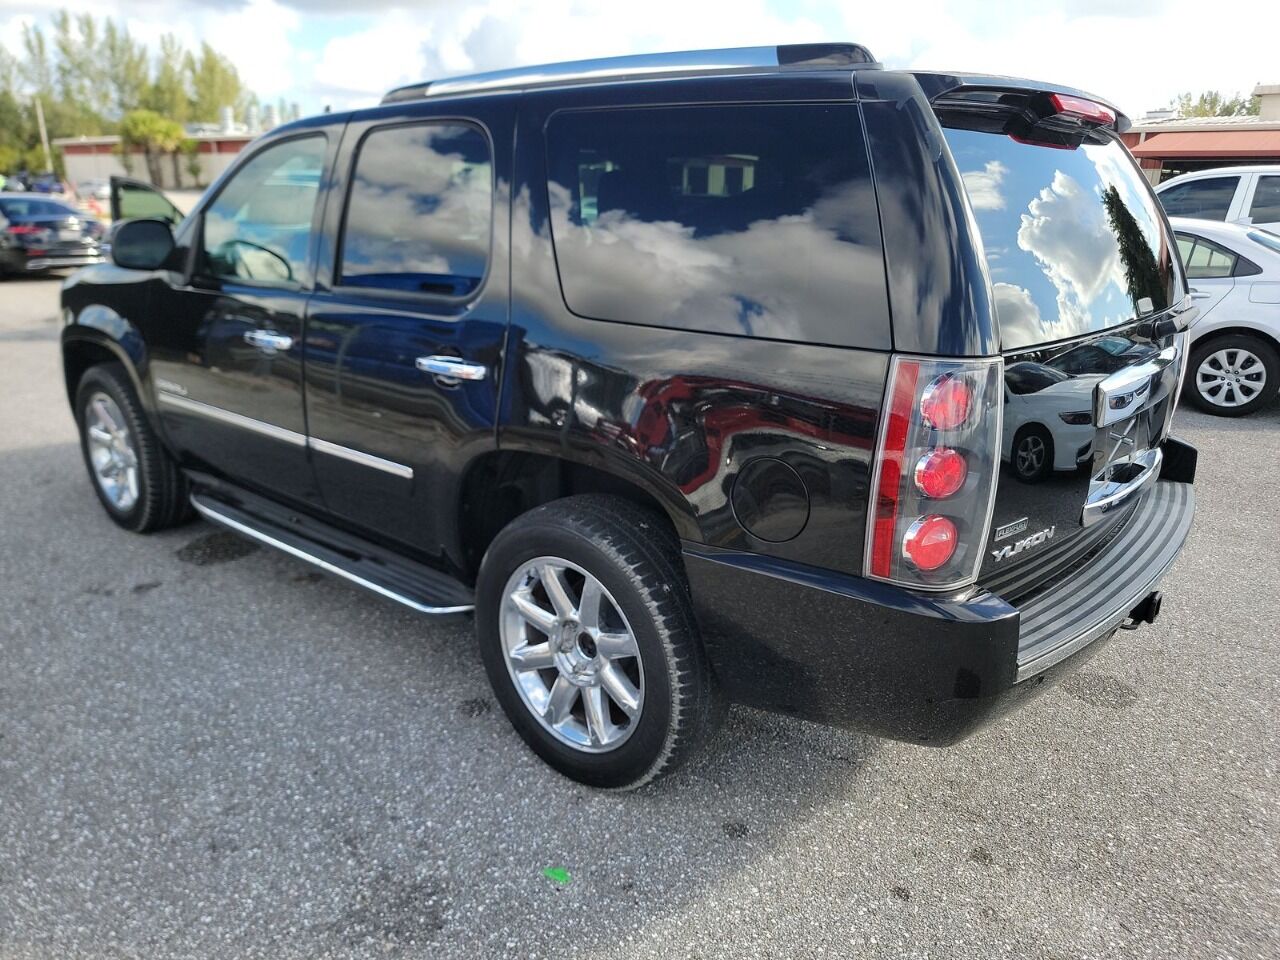 2011 GMC Yukon SUV / Crossover - $7,995